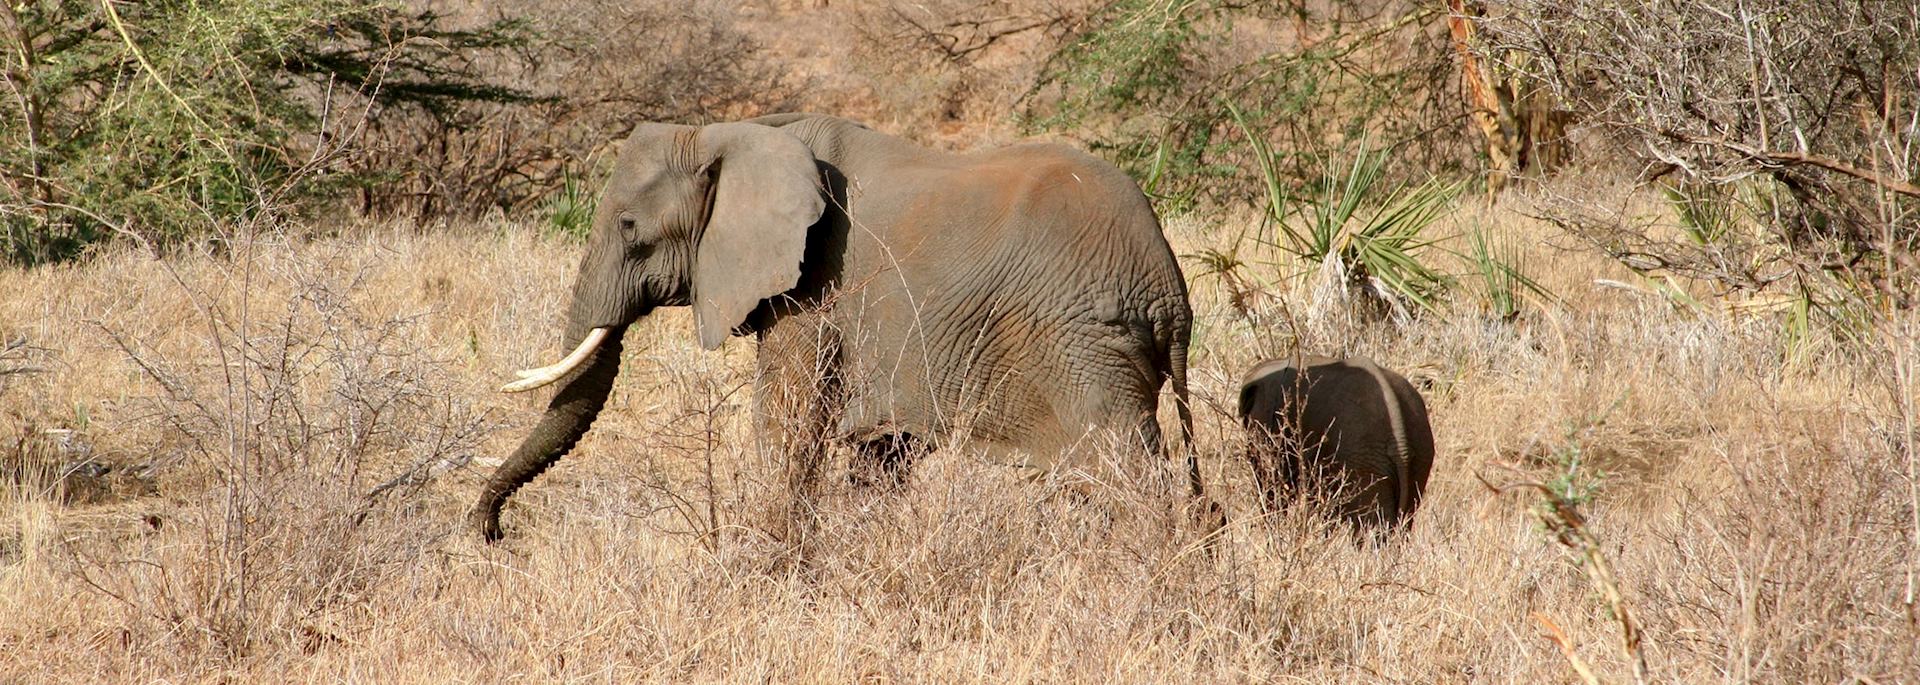 Elephant in the Meru National Park, Kenya